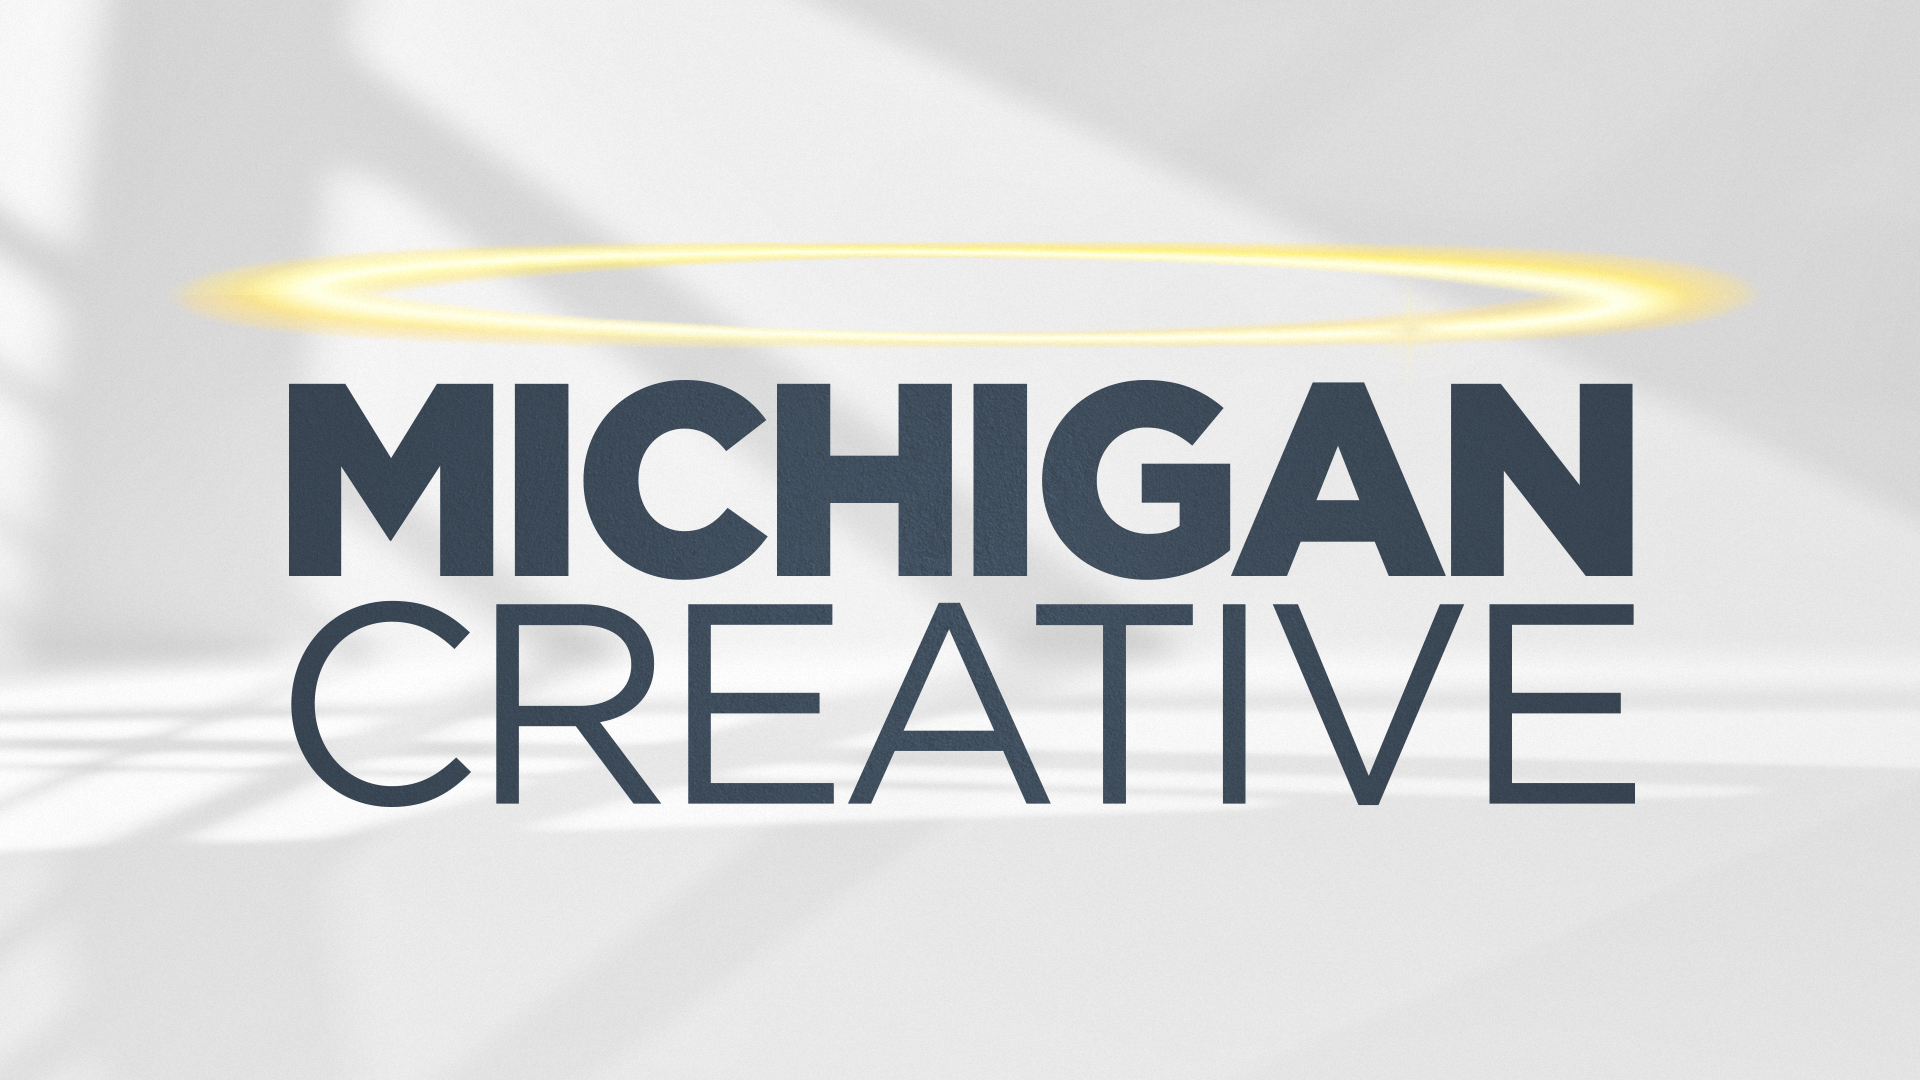 Michigan Creative Logo With a Halo